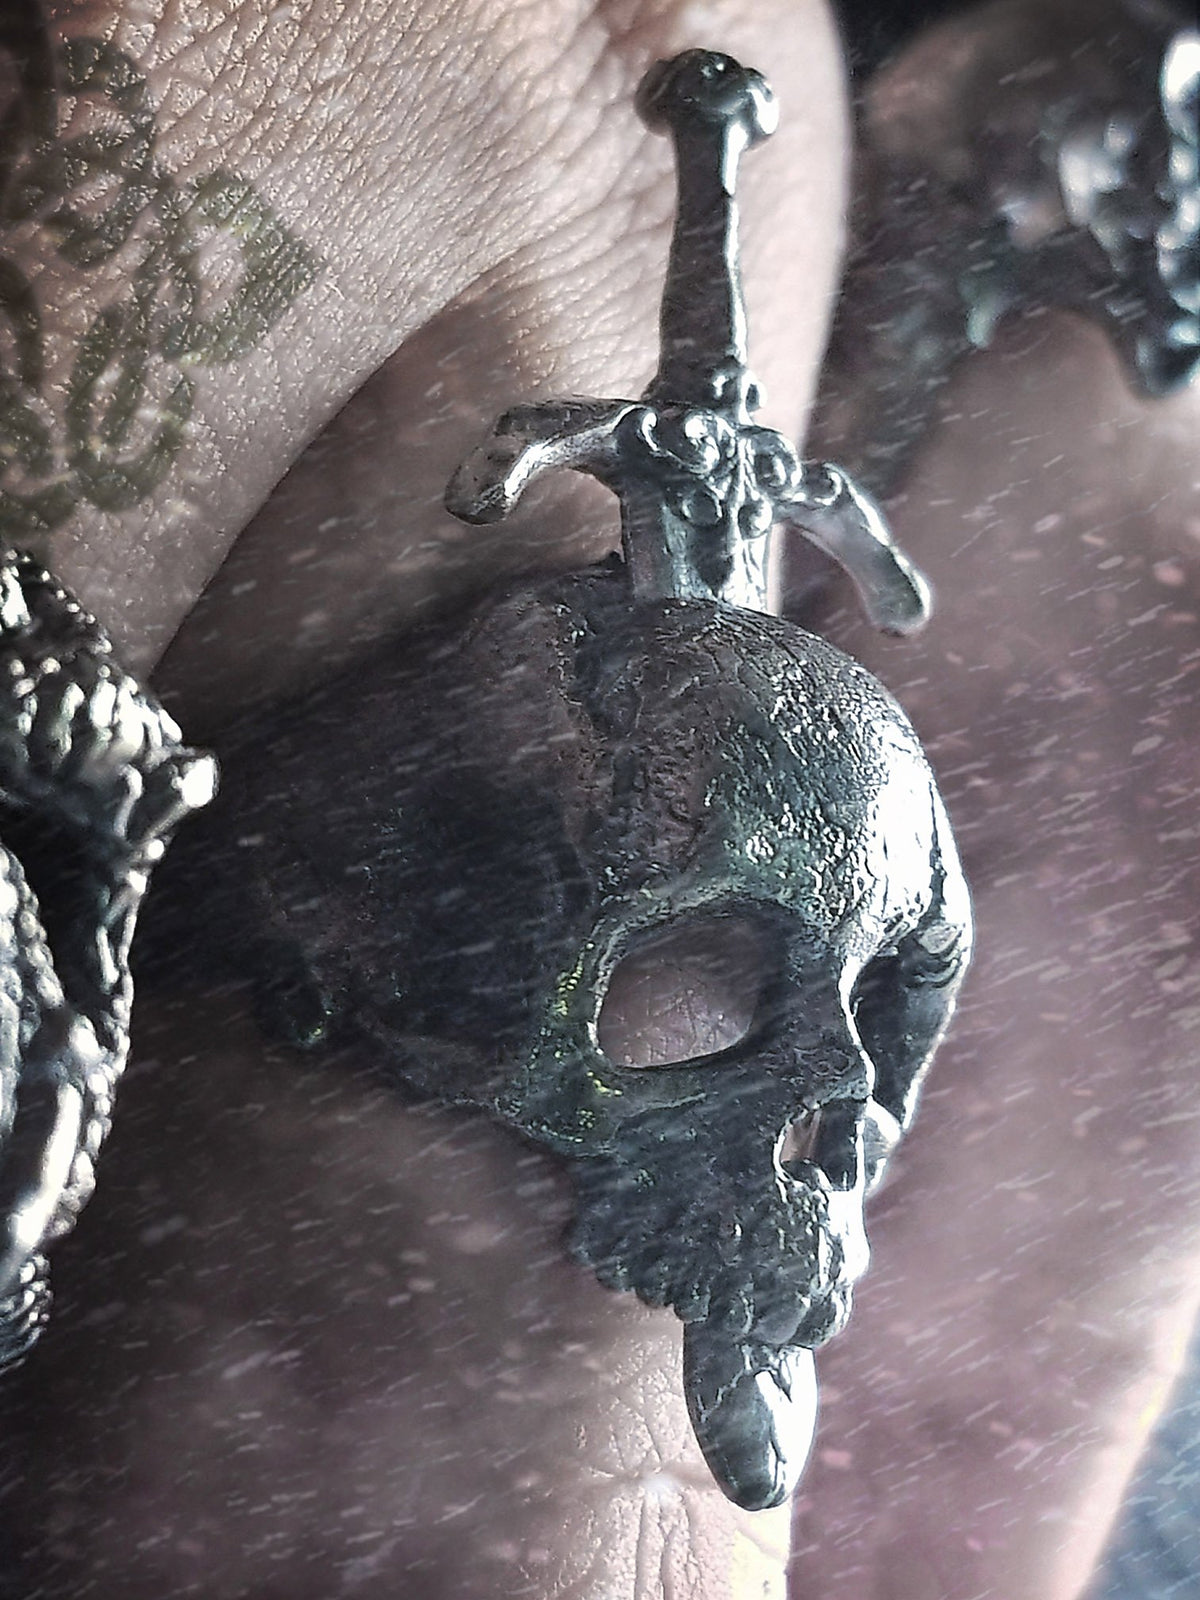 Skull Ring | Defeated Warrior